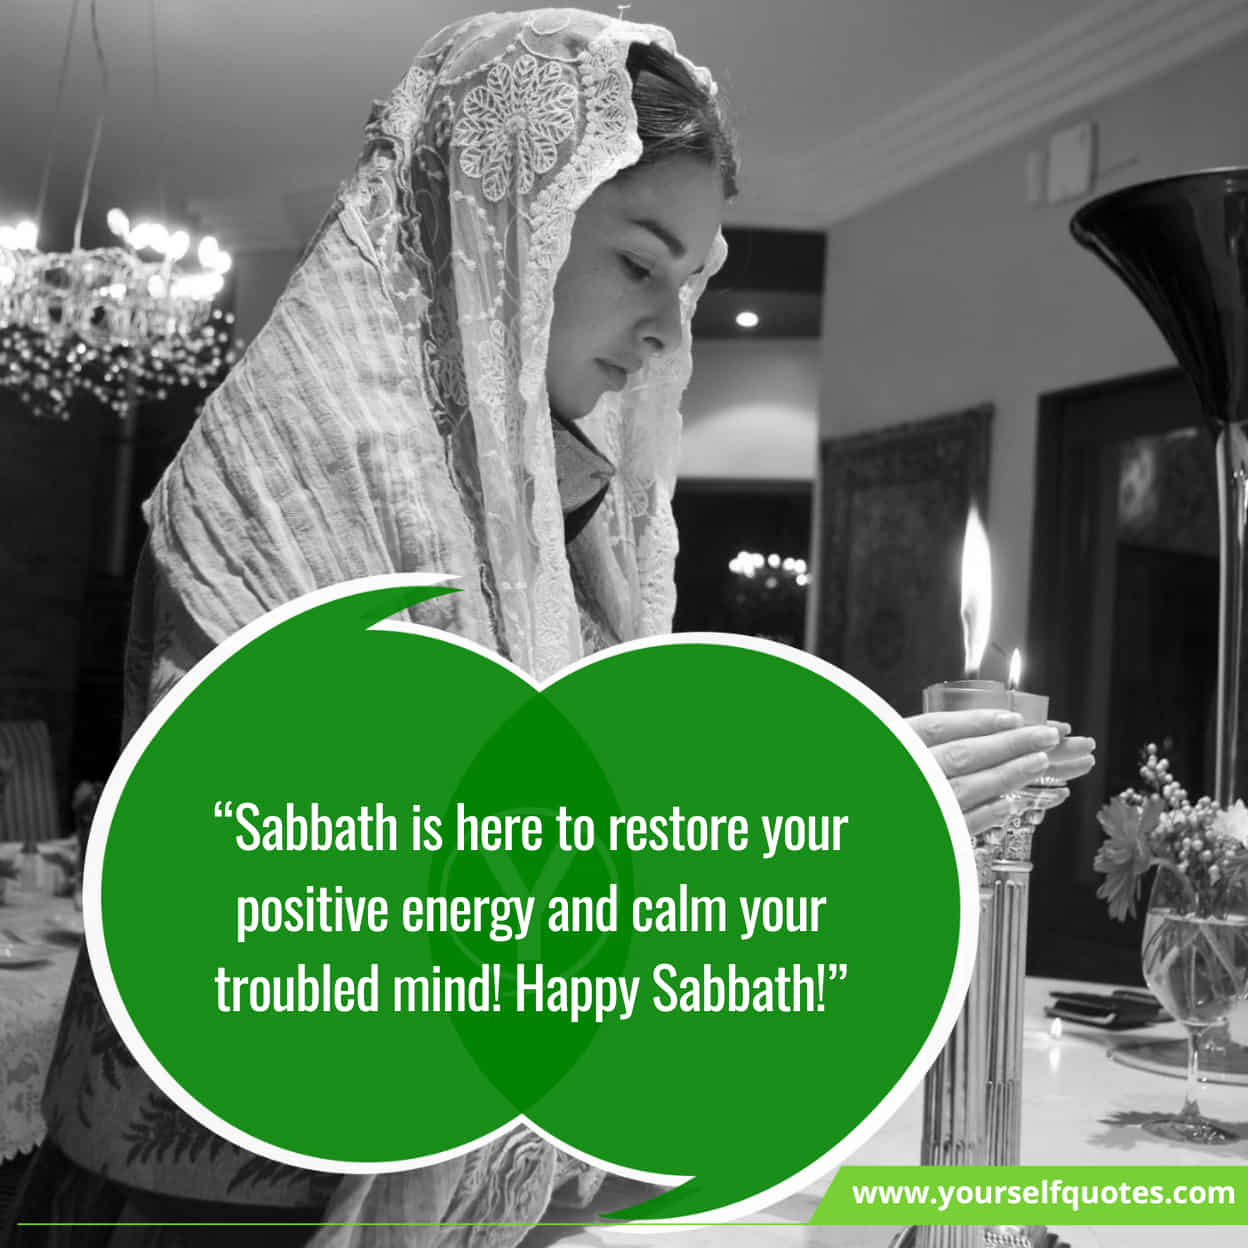 Happy Sabbath Messages Slogans